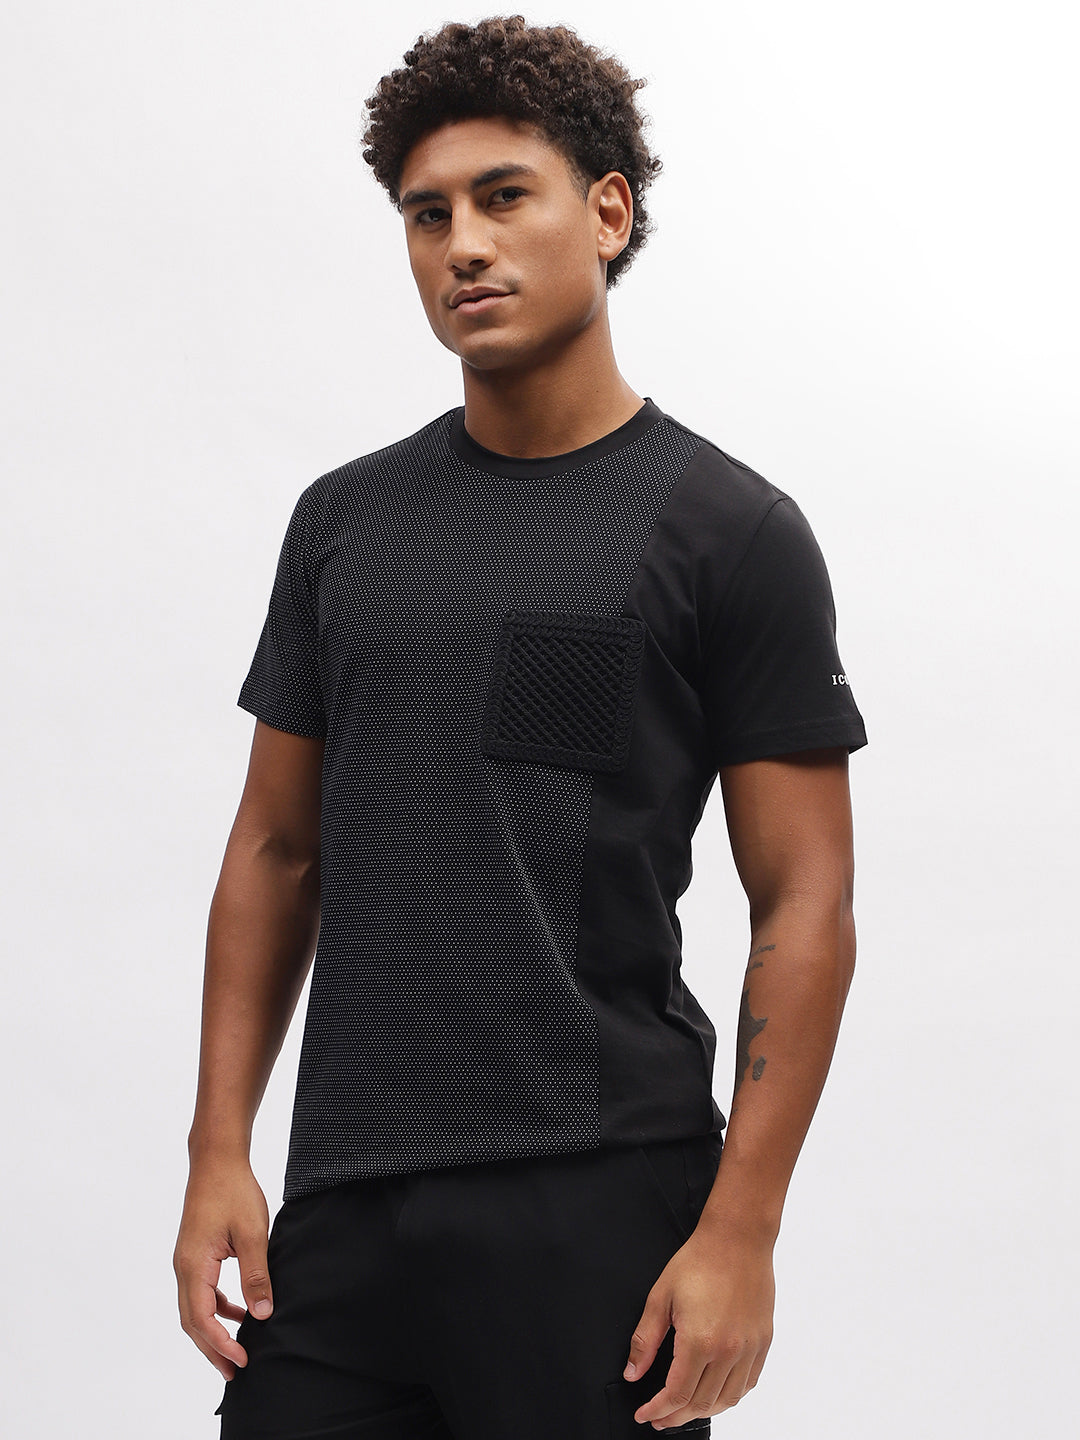 Iconic Men Black Printed Round Neck Short Sleeves T-Shirt